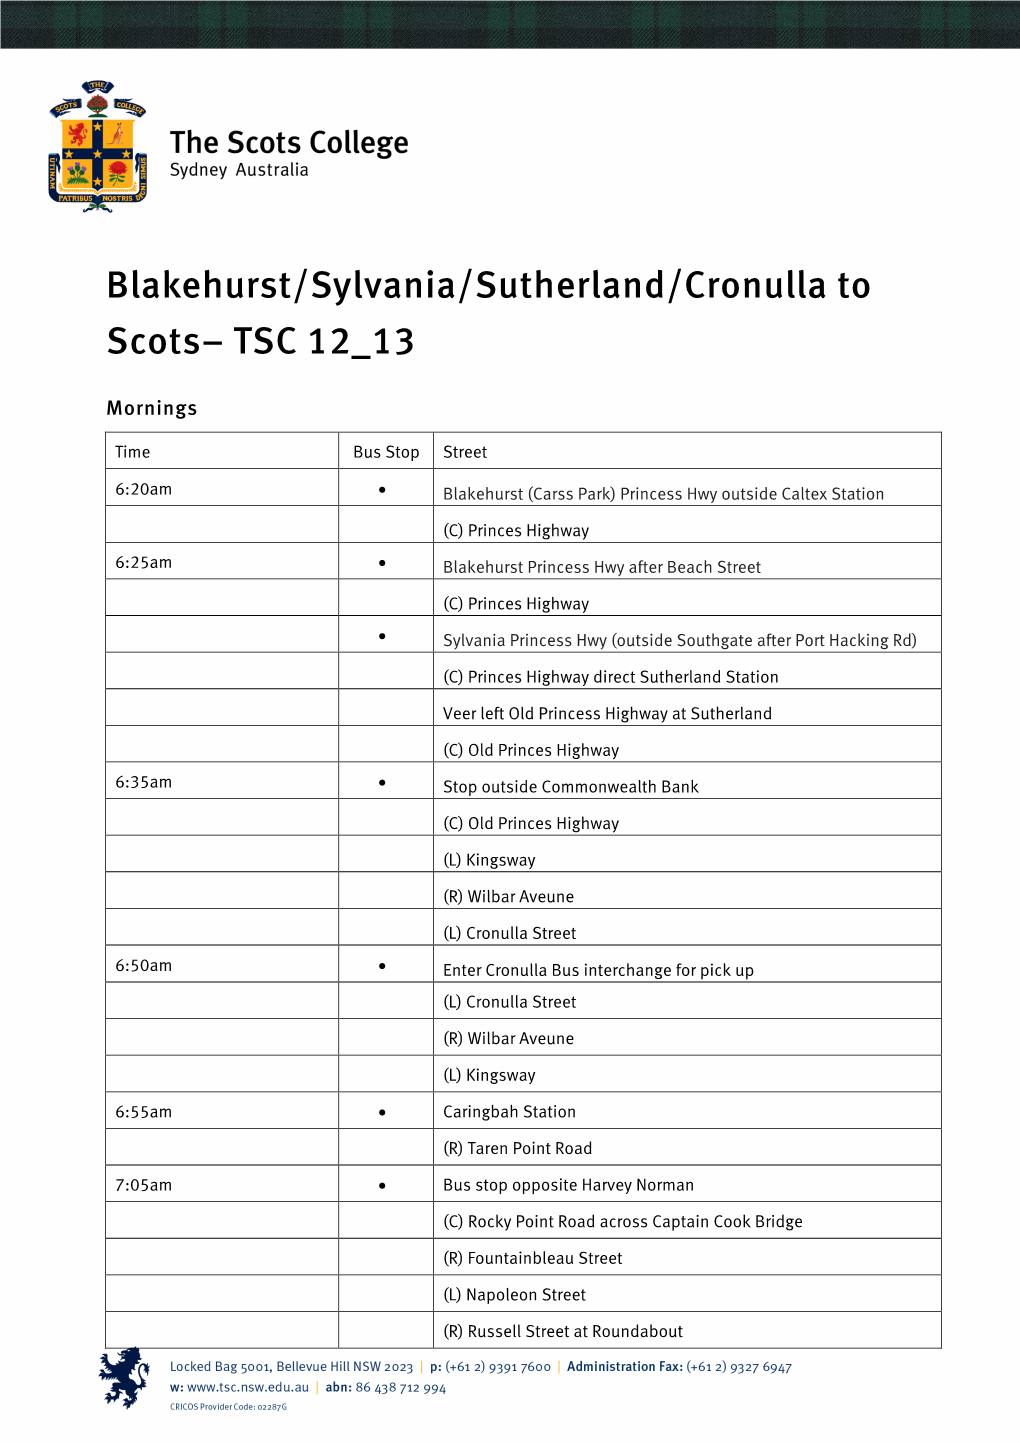 Blakehurst/Sylvania/Sutherland/Cronulla to Scots– TSC 12 13